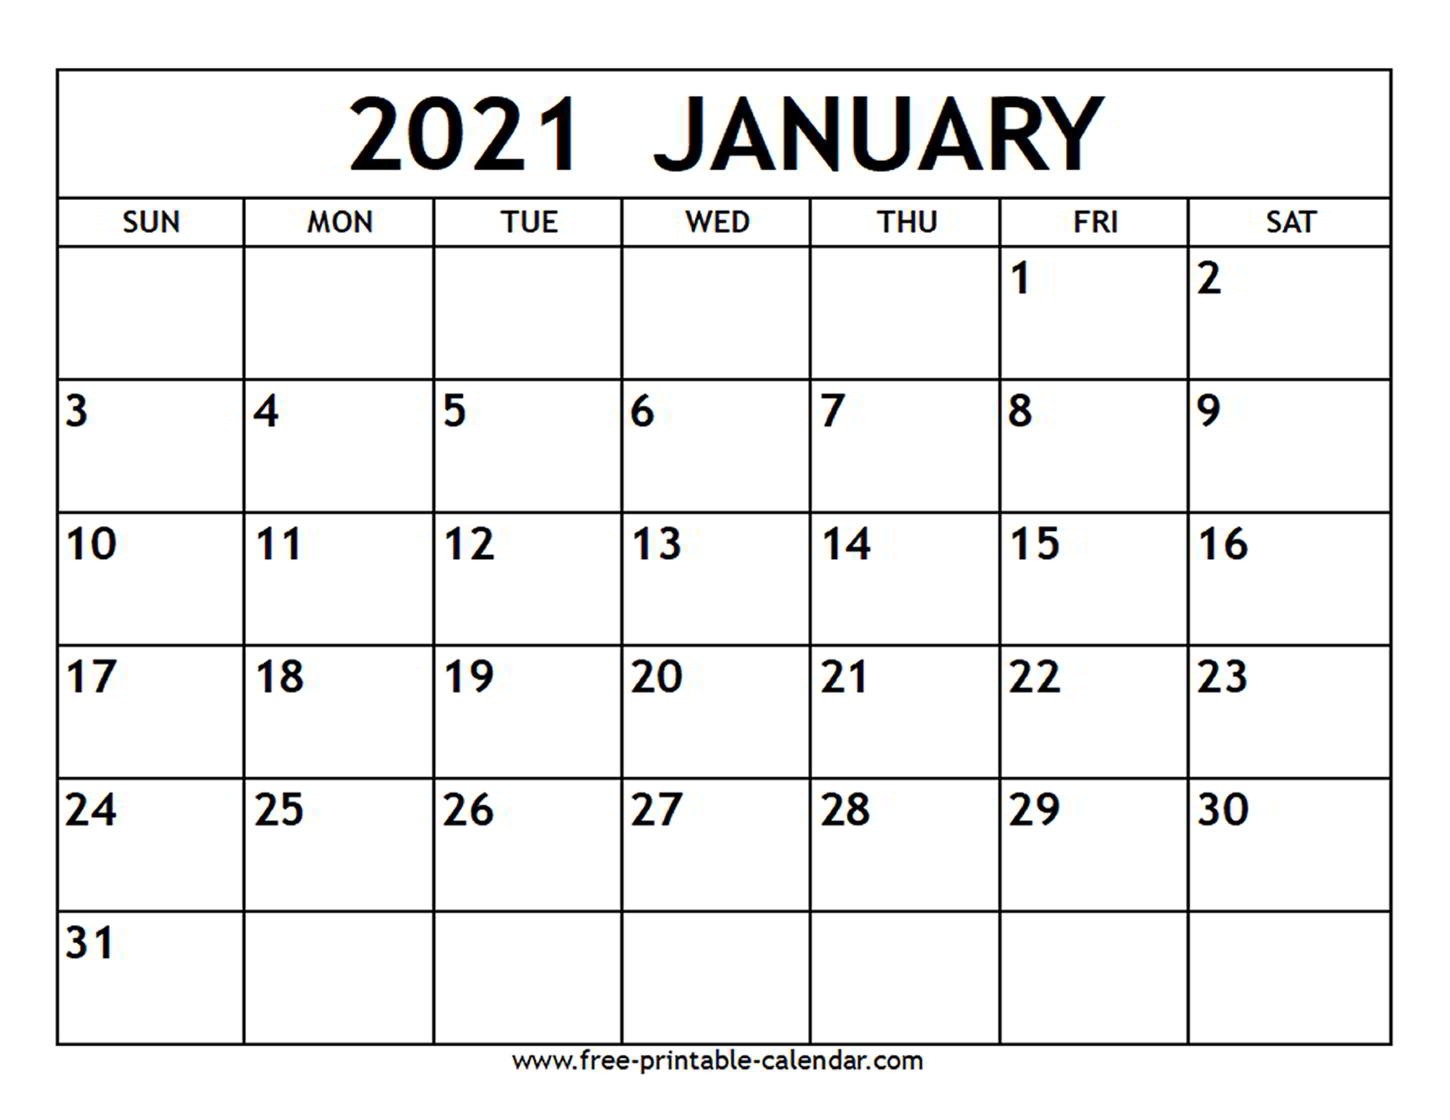 January 2021 Calendar - Free-Printable-Calendar-2021 Fill In Calendar Template